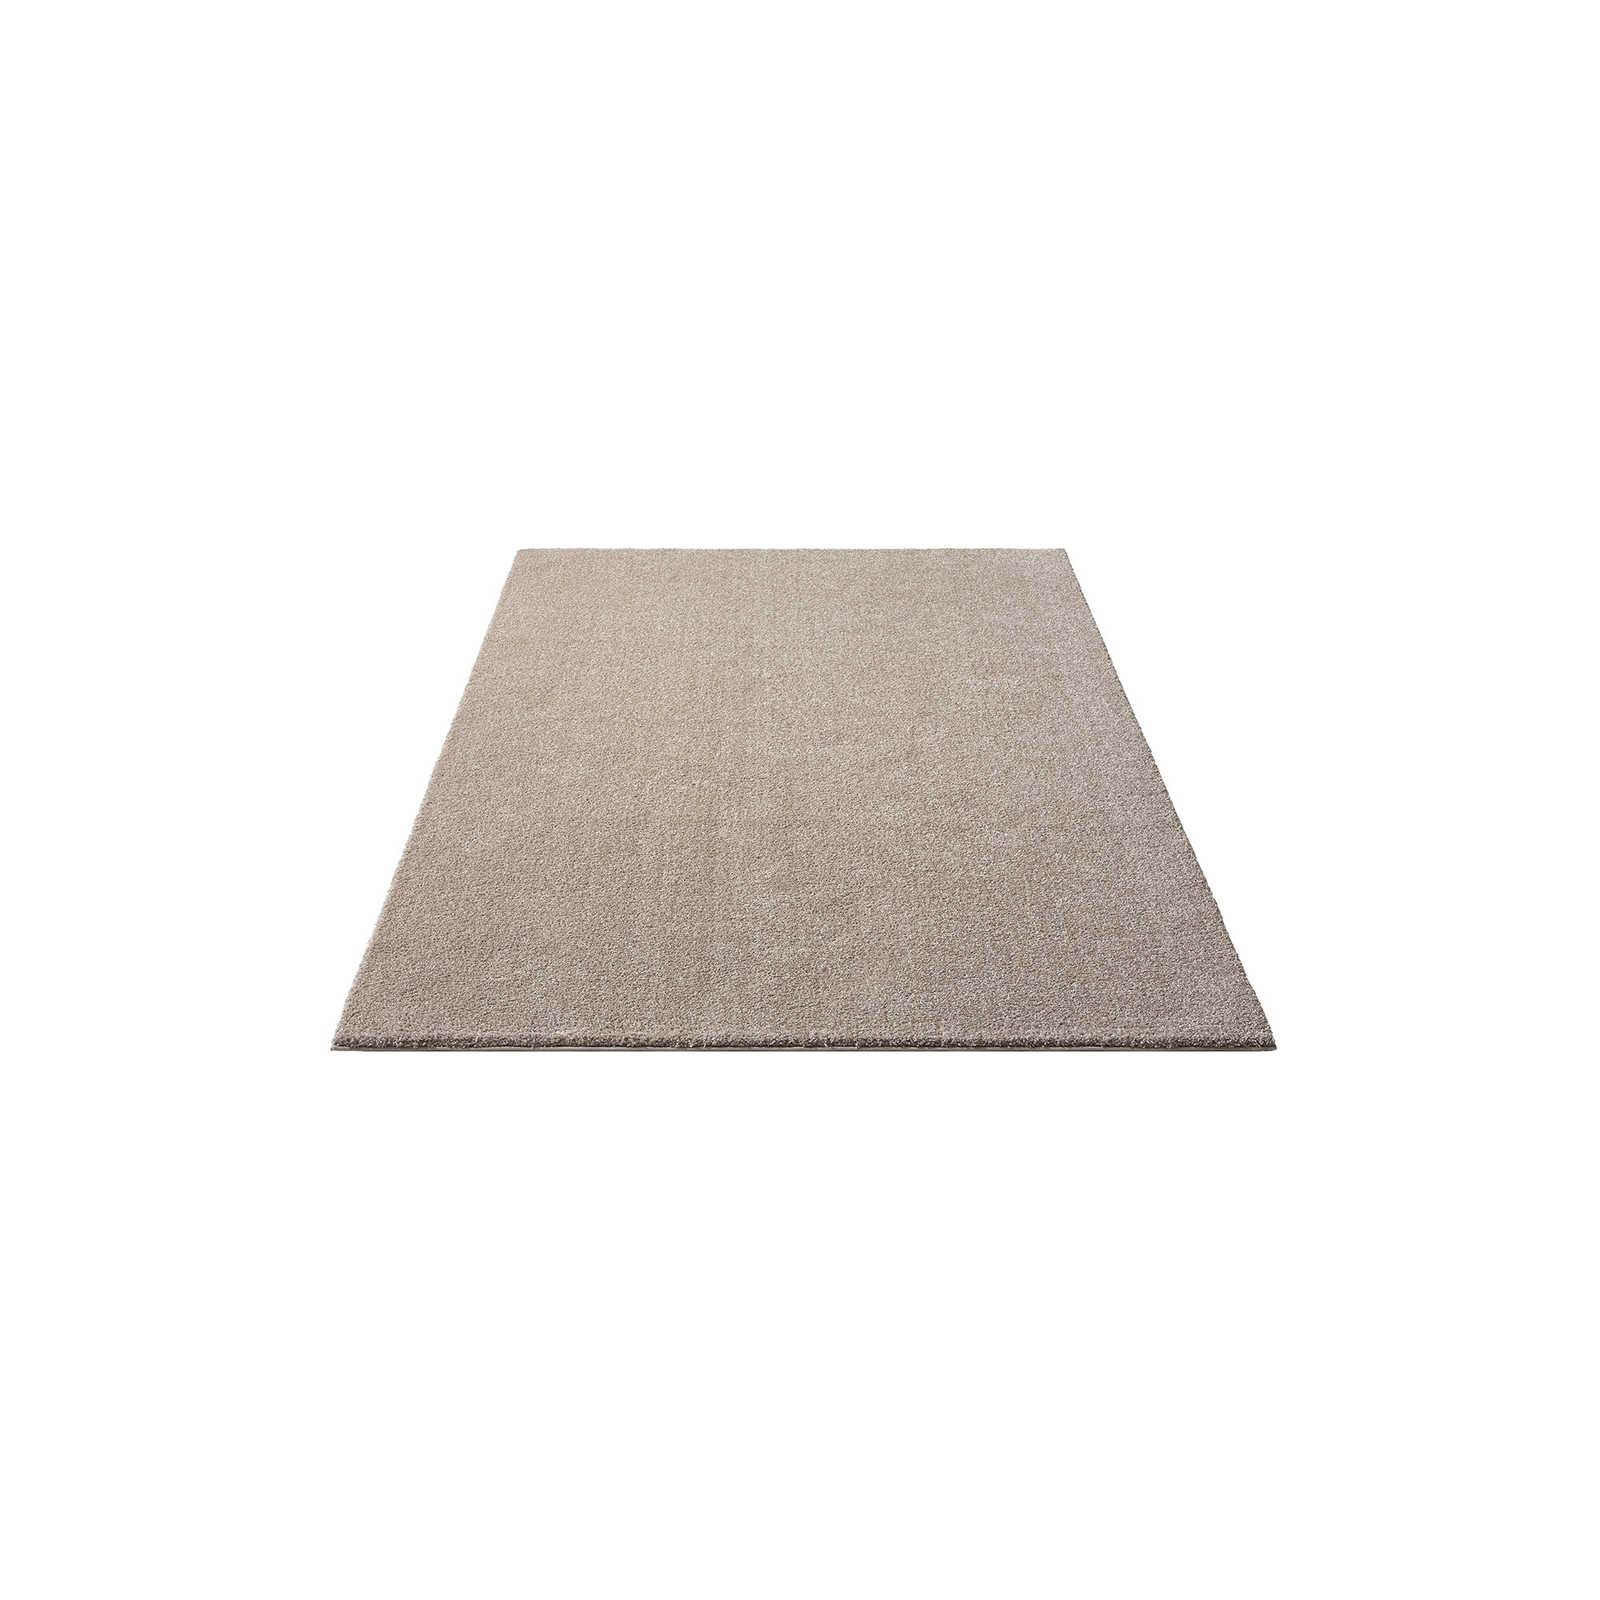 Soft short pile carpet in beige - 170 x 120 cm
